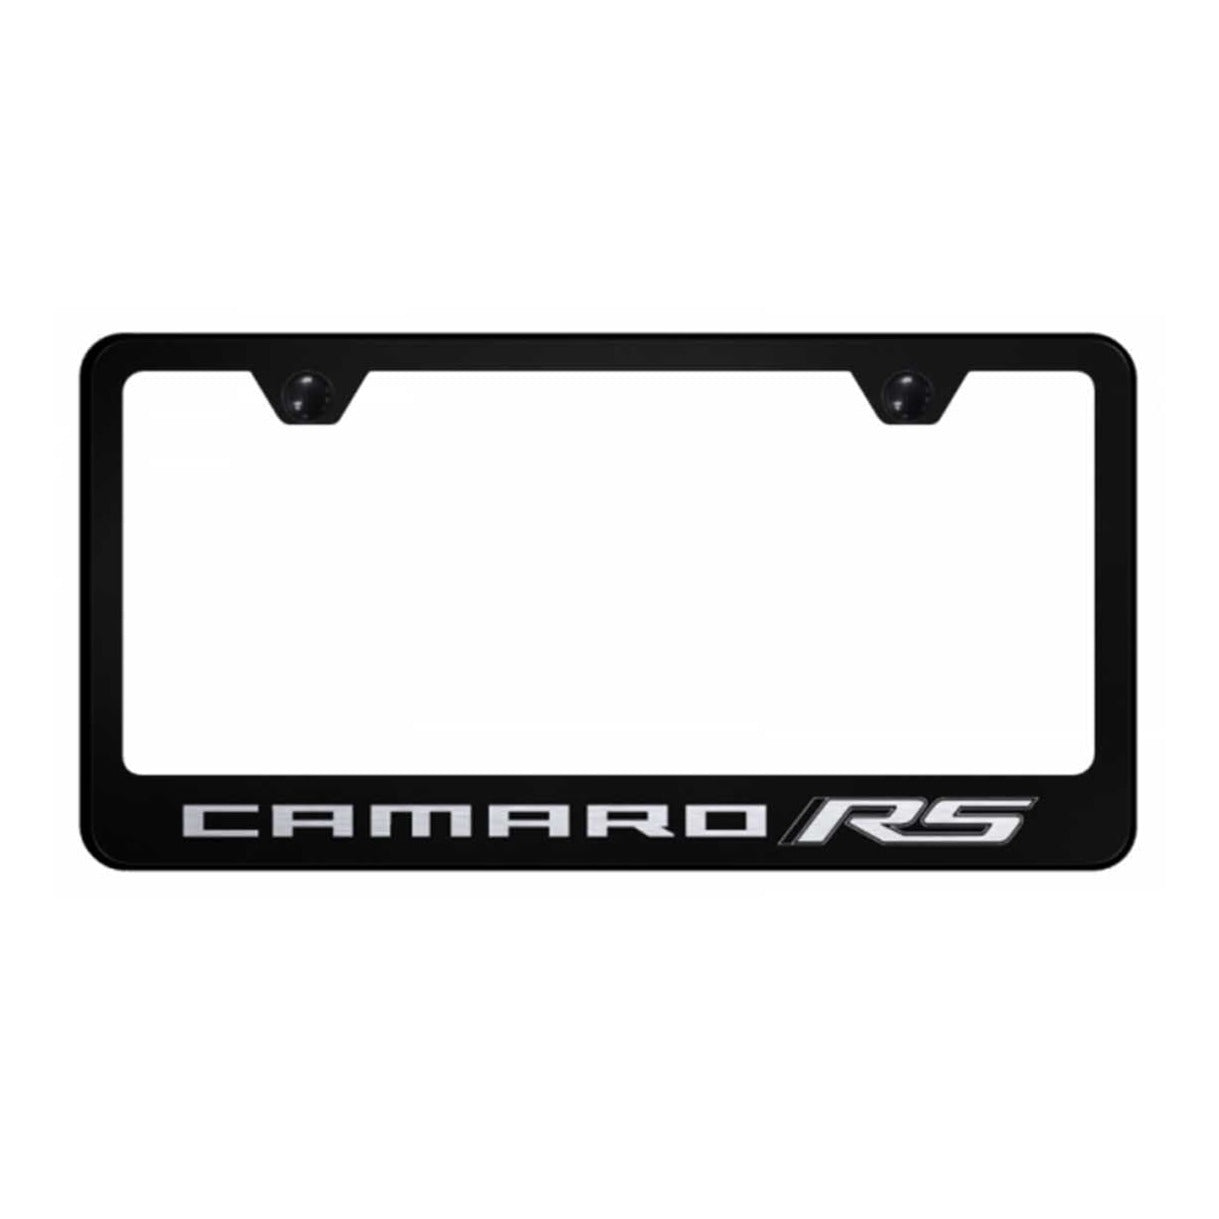 Camaro RS Stainless Steel Frame - Laser Etched Black